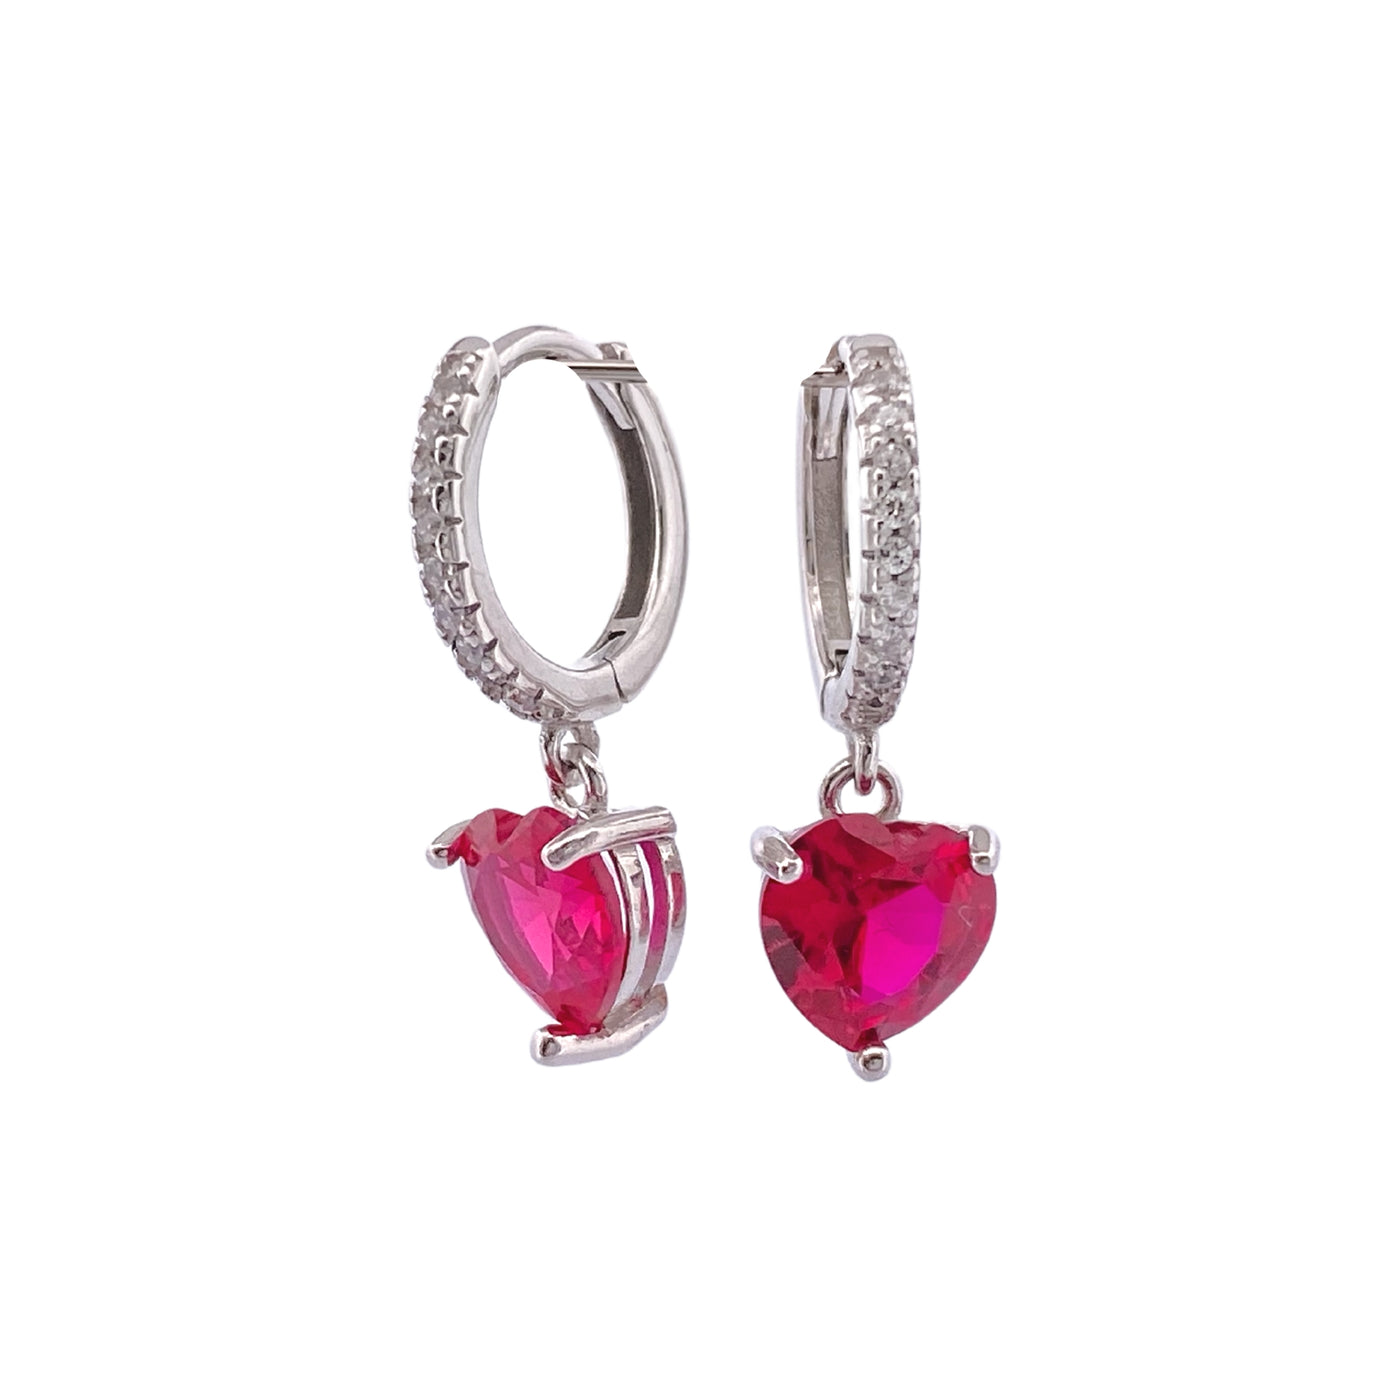 Silver hoop earrings with heart charm - rhodium